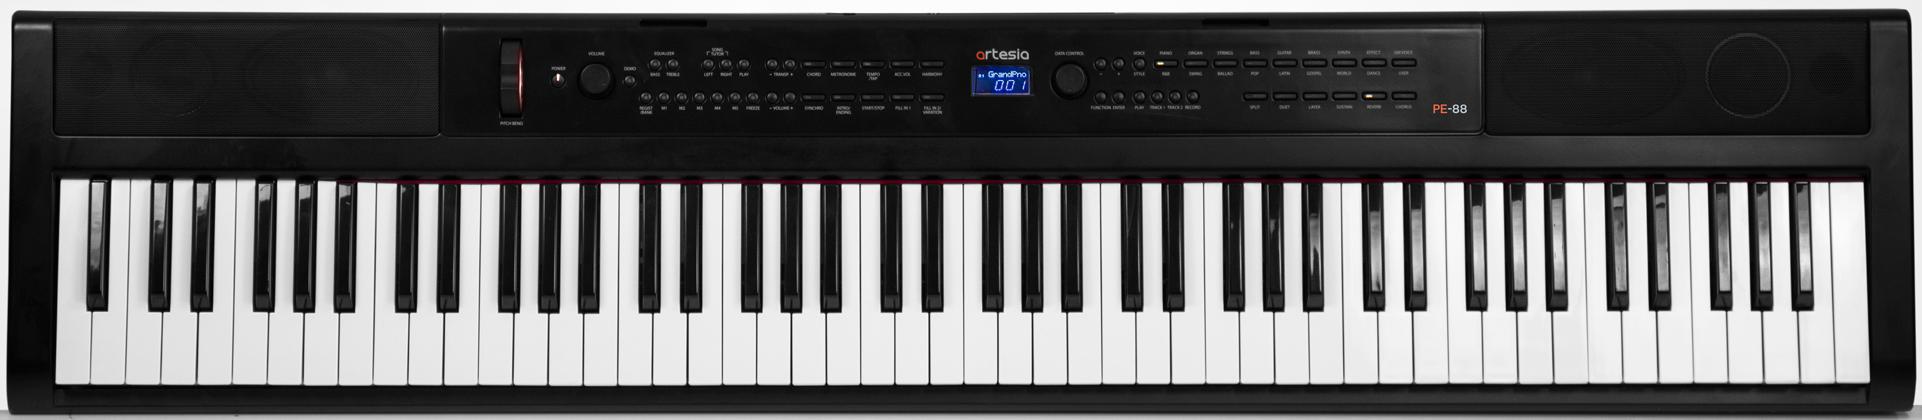 Цифровое пианино Artesia PE-88 BK